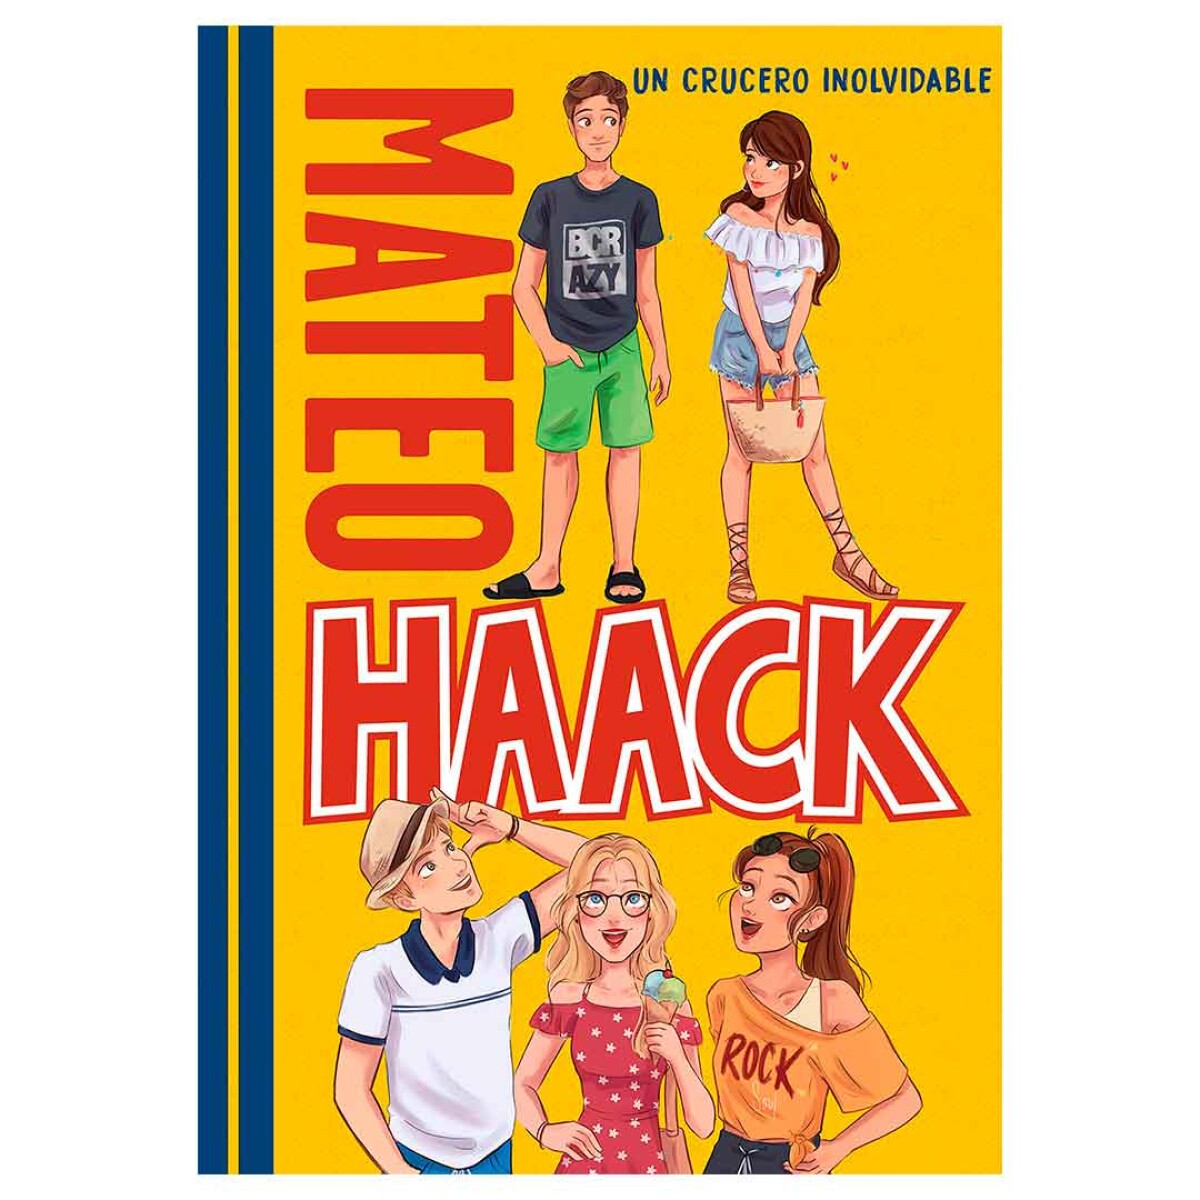 Libro Un crucer Inolvidable Mateo Haack - 001 